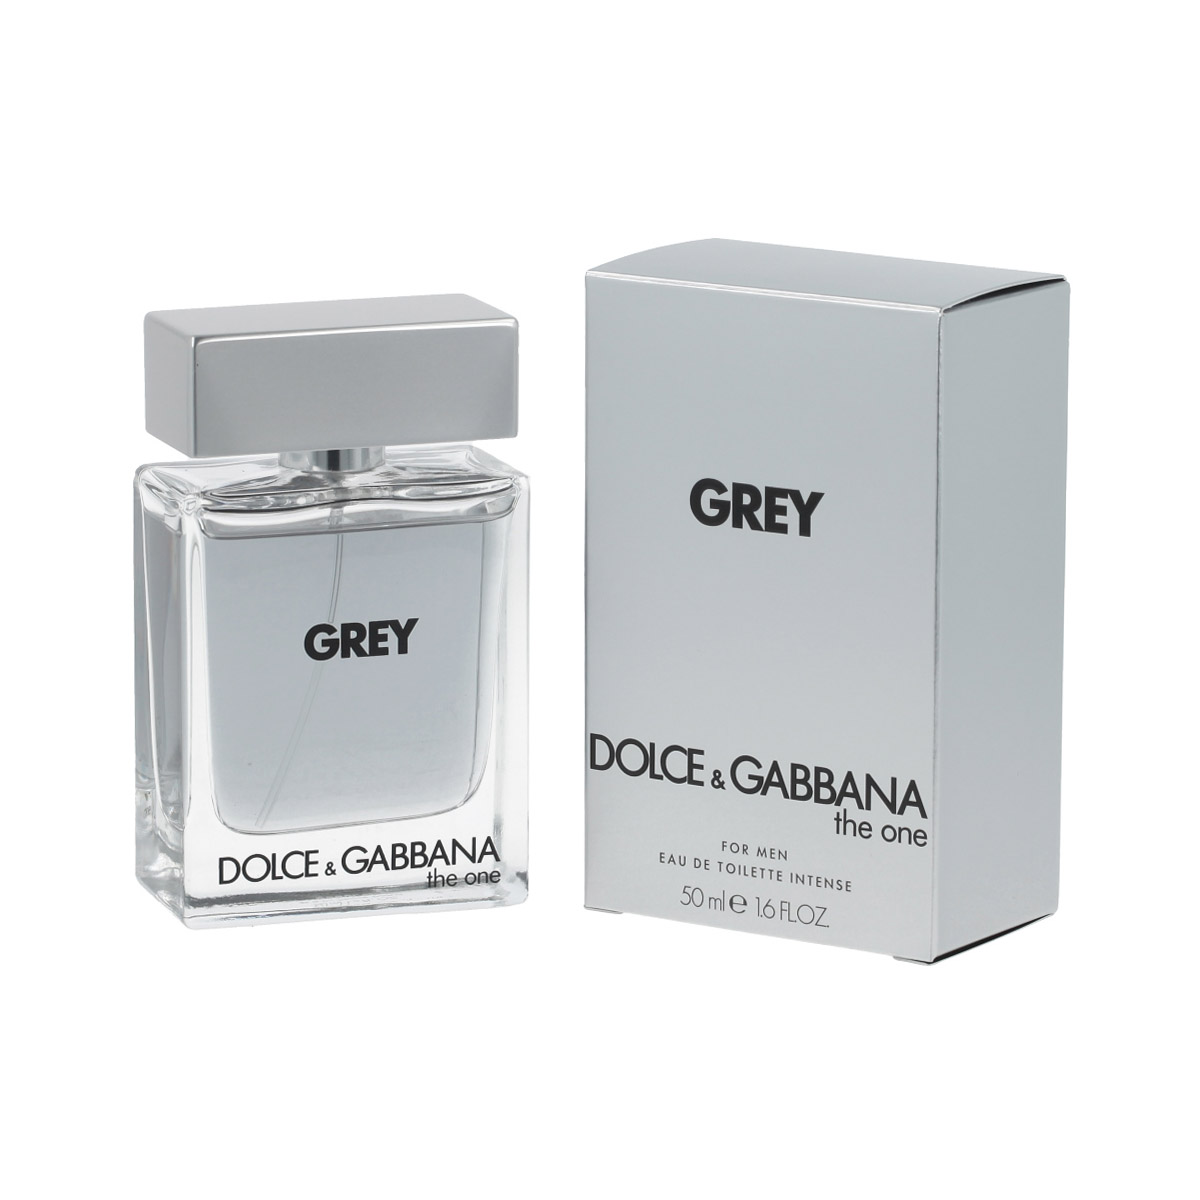 Дольче габбана кью отзывы. Dolce Gabbana the one Grey. Туалетная вода Dolce & Gabbana the one Grey. Dolce Gabbana Grey. Dolce Gabbana the one for men Grey.